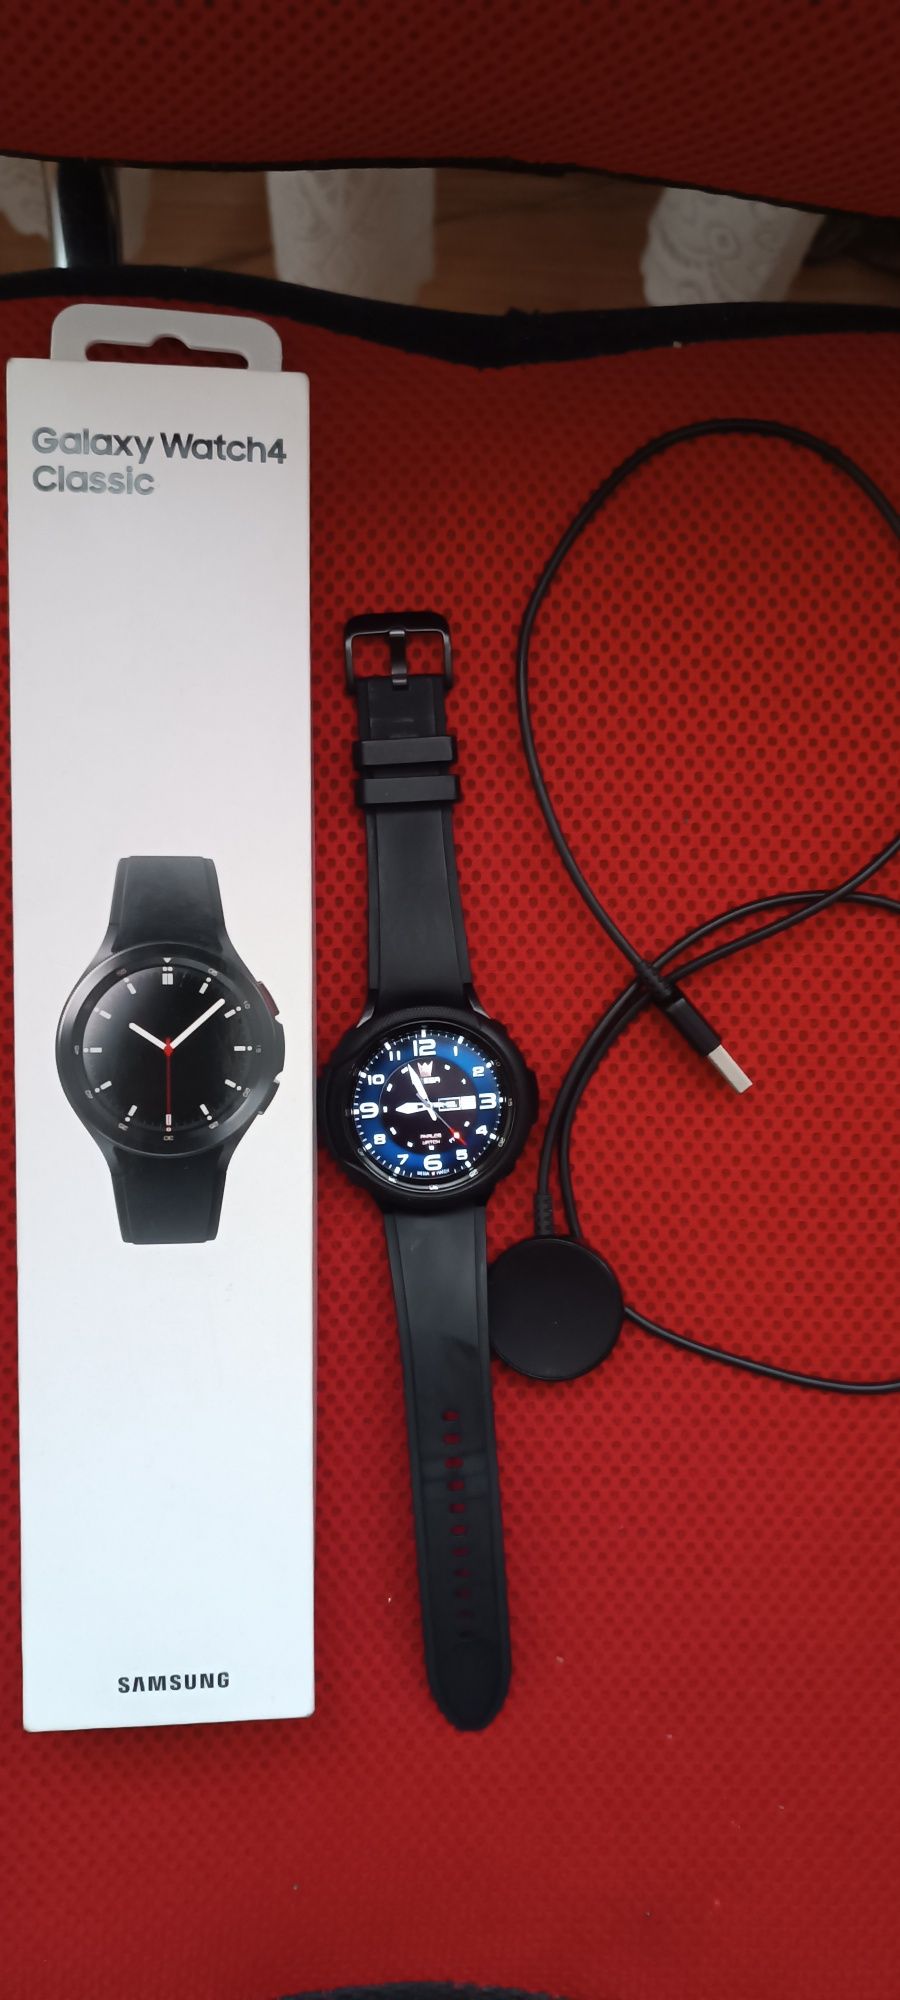 Vând ceas smartwatch Samsung wach 4 clasic Fullbox aproape nou .